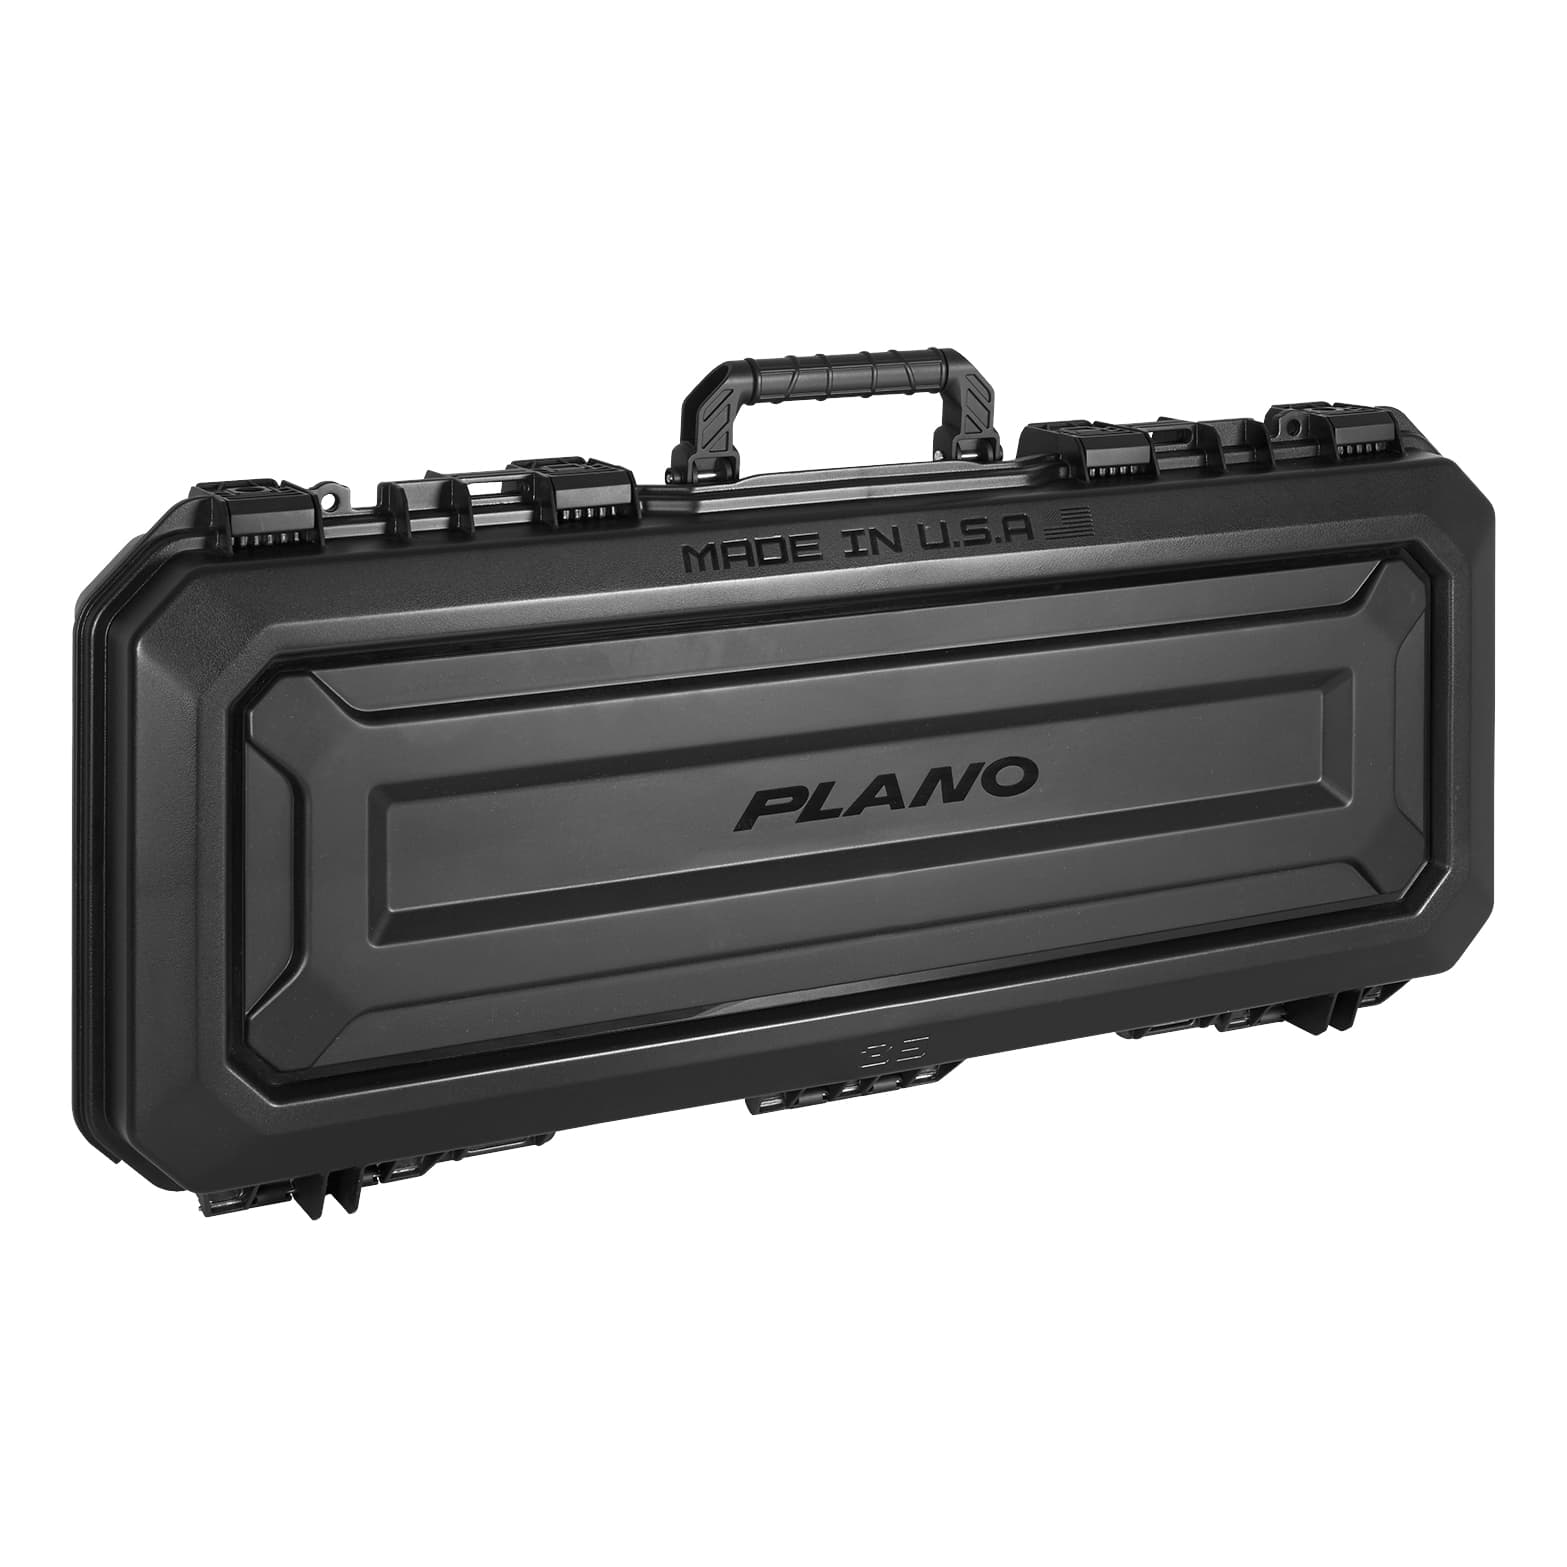 Plano® All Weather Gun Case